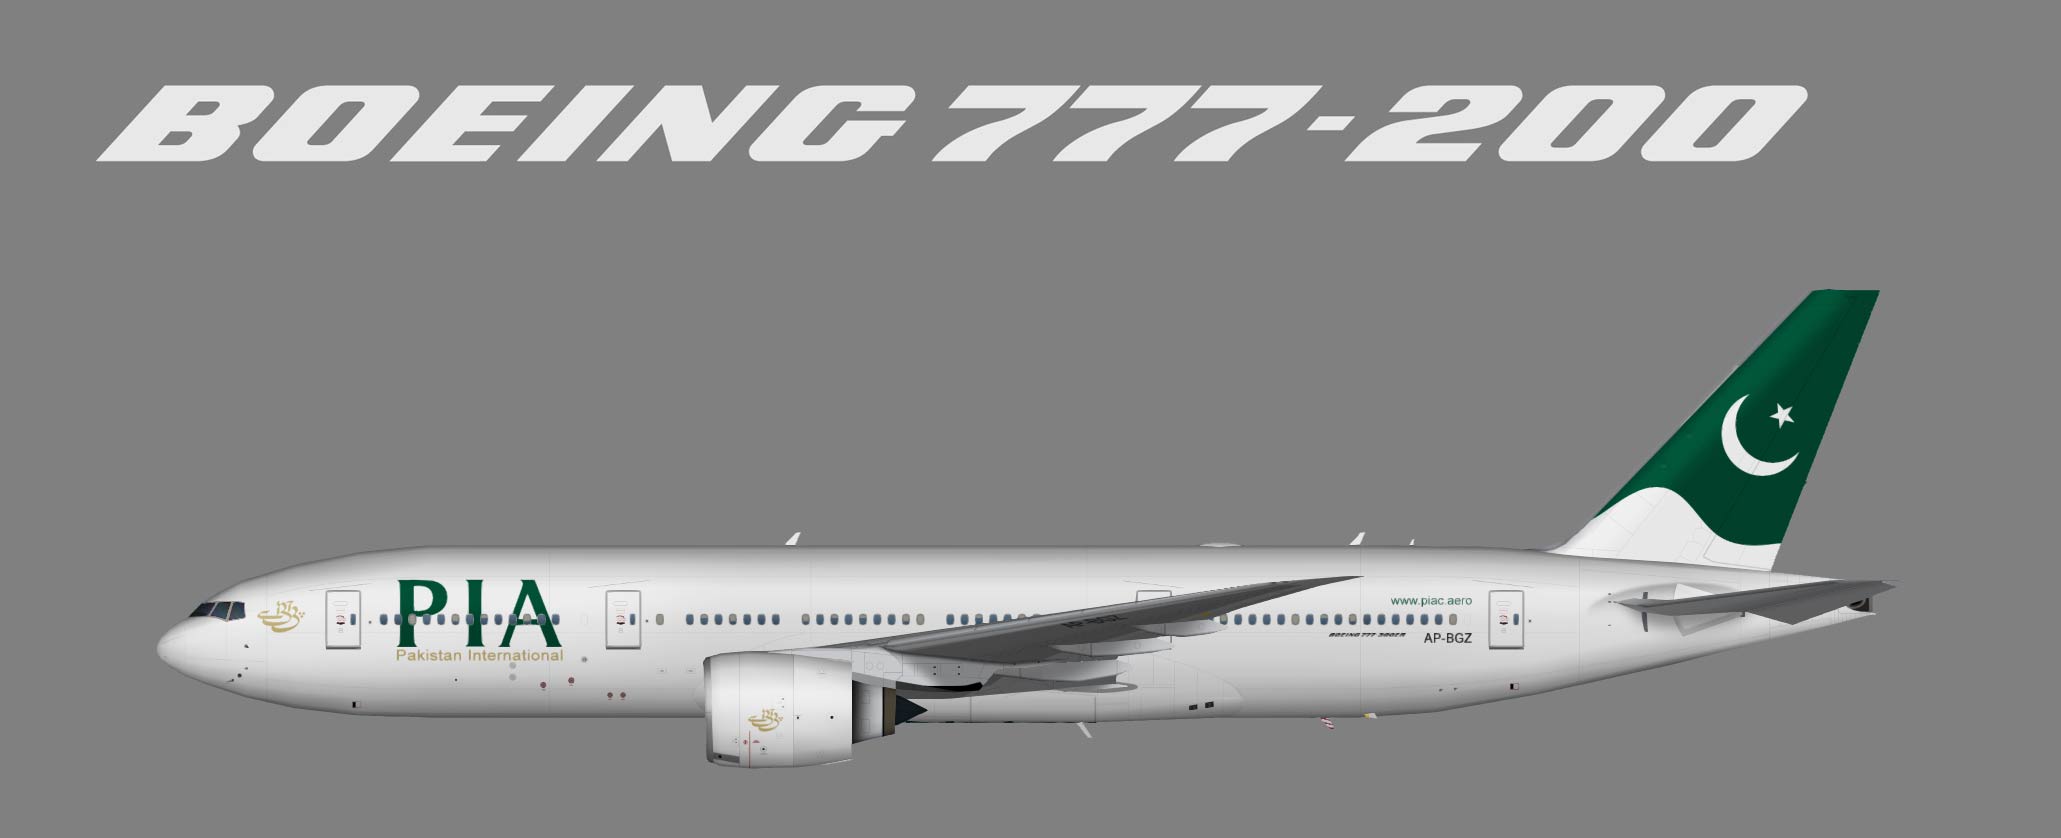 TFS Pakistan International Airlines (PIA) Boeing 777-200LR